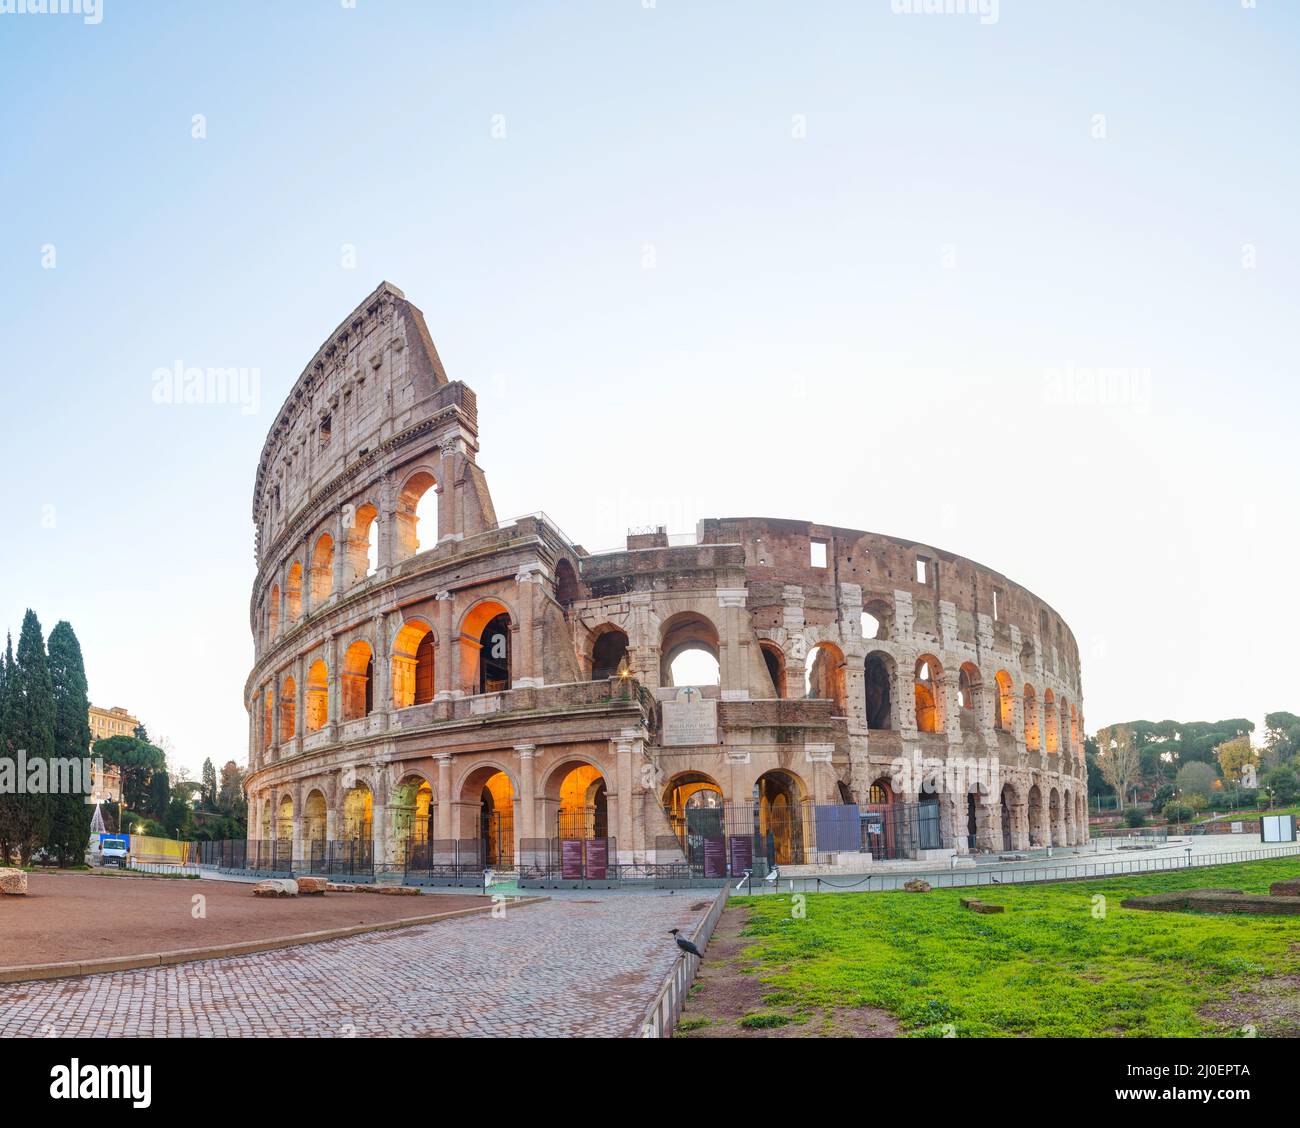 The Colosseum or Flavian Amphitheatre in Rome Stock Photo